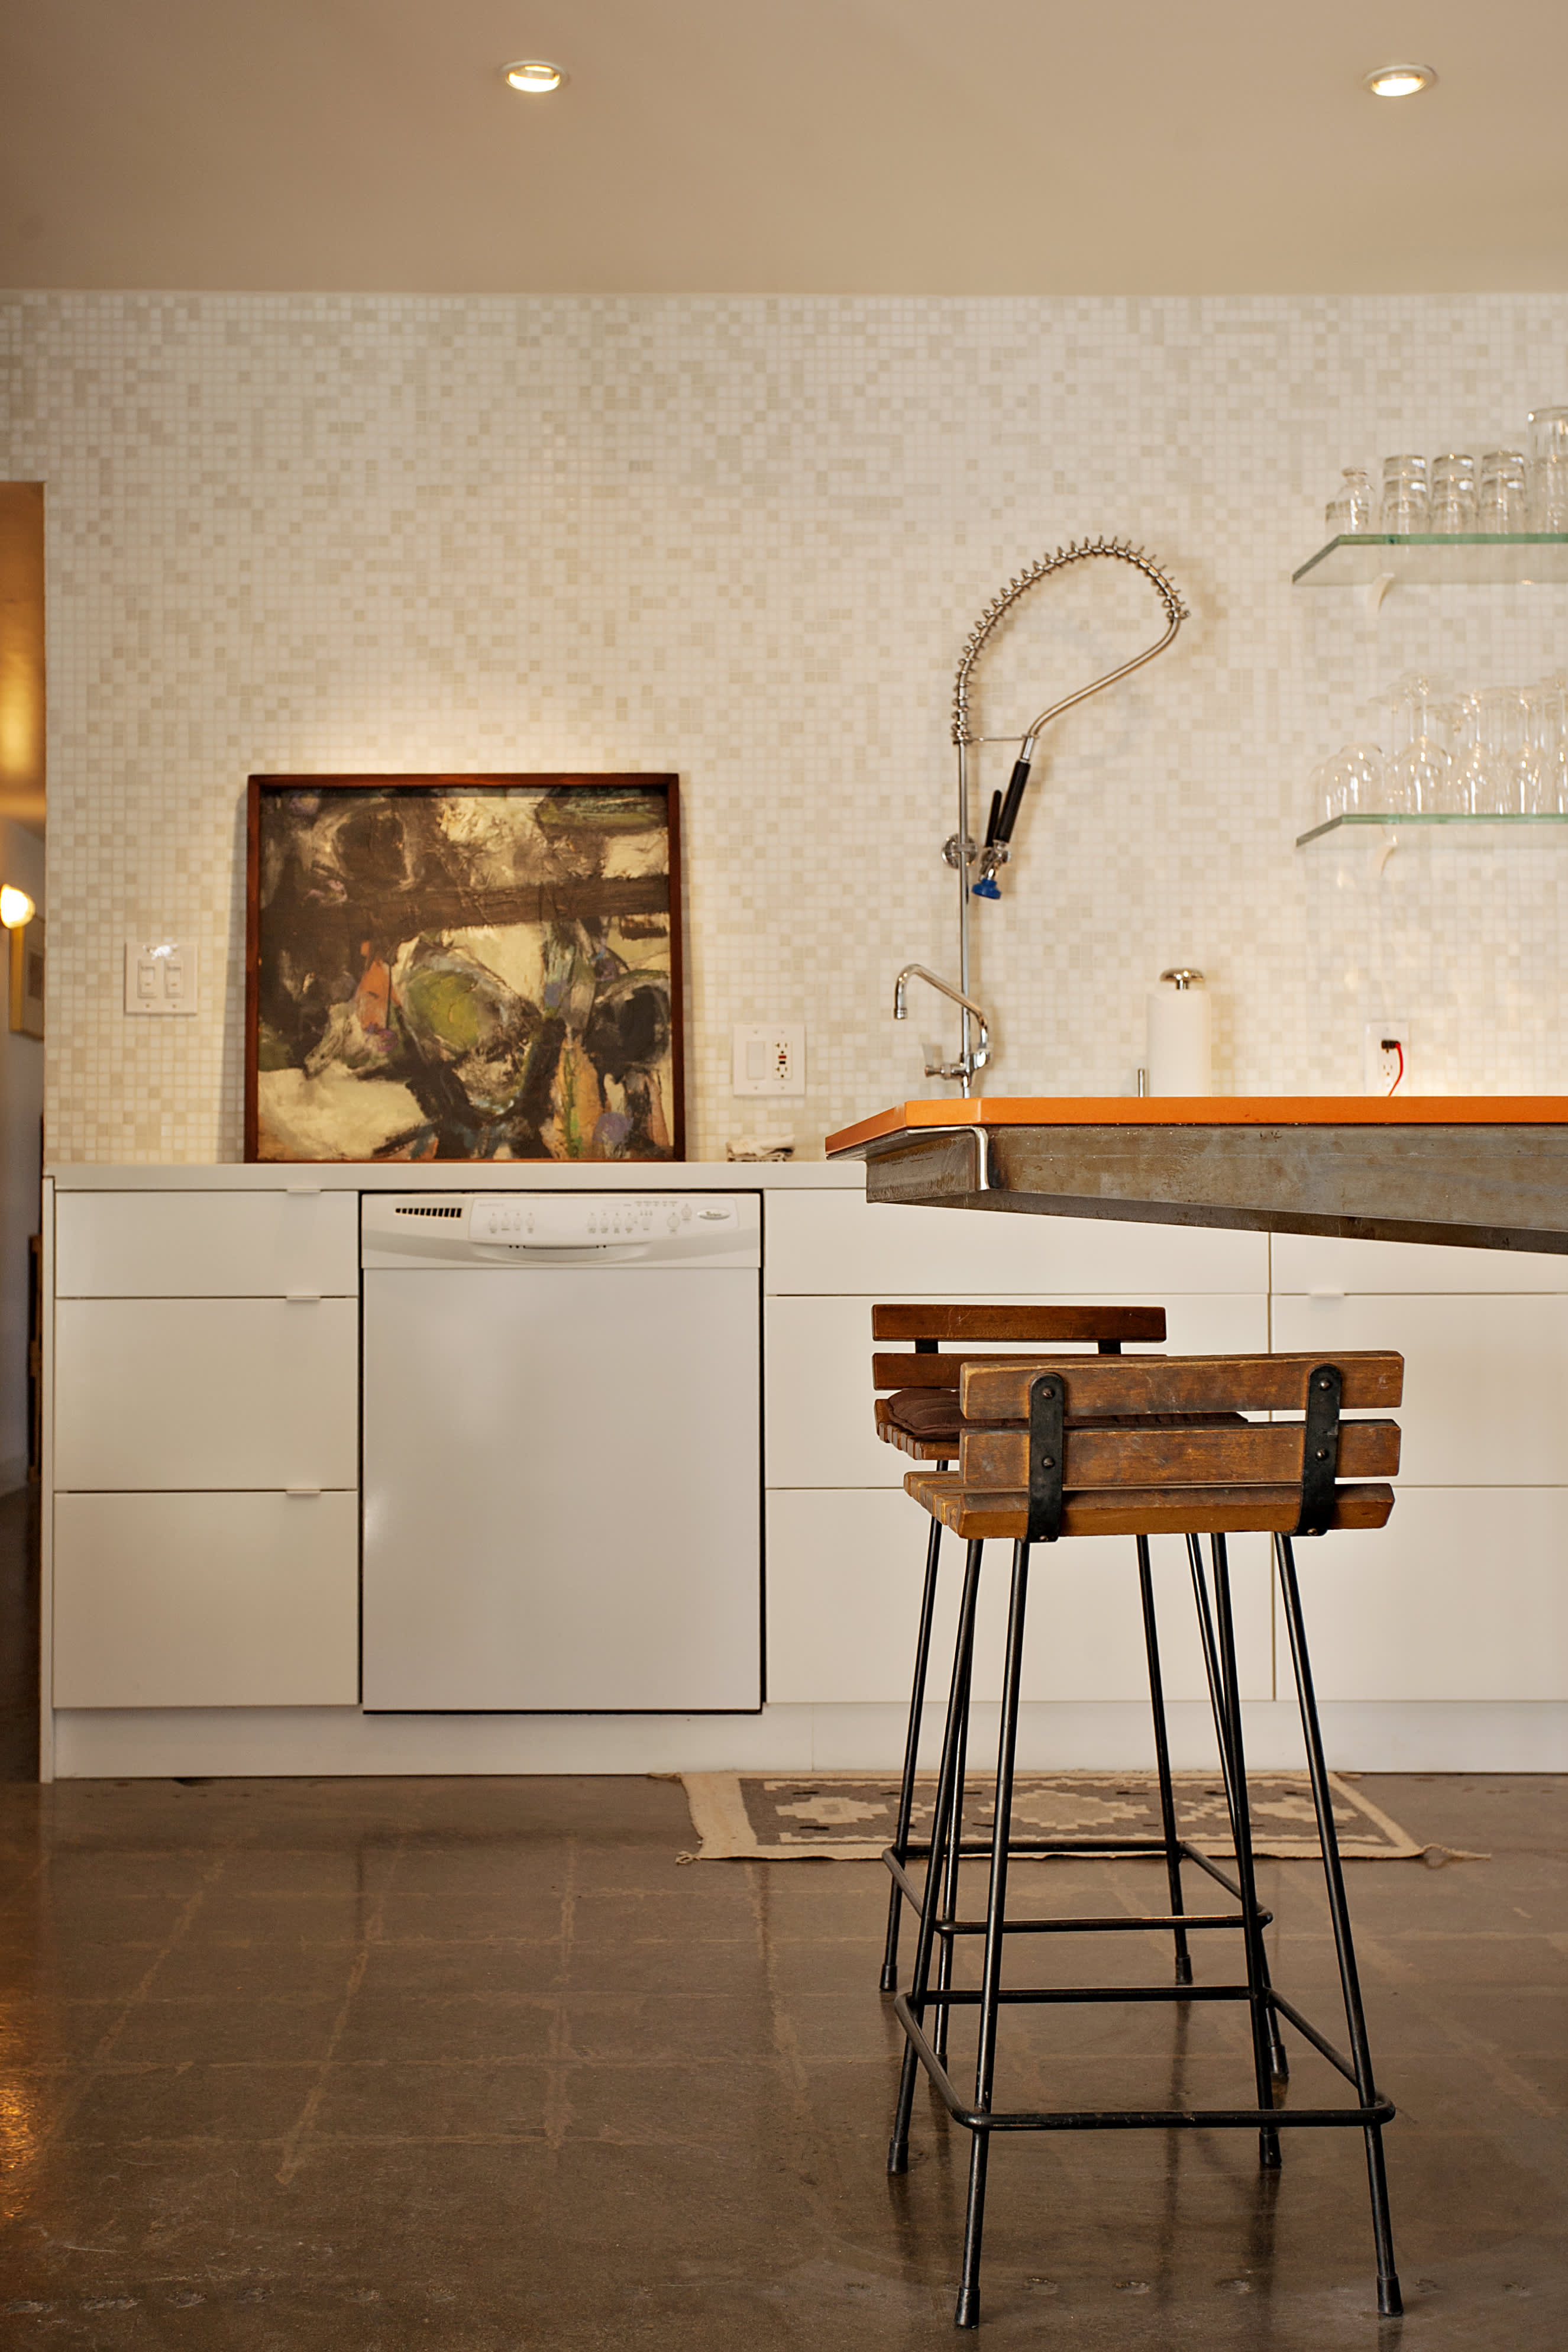 Small Kitchen Design Ideas Worth Saving | Apartment Therapy